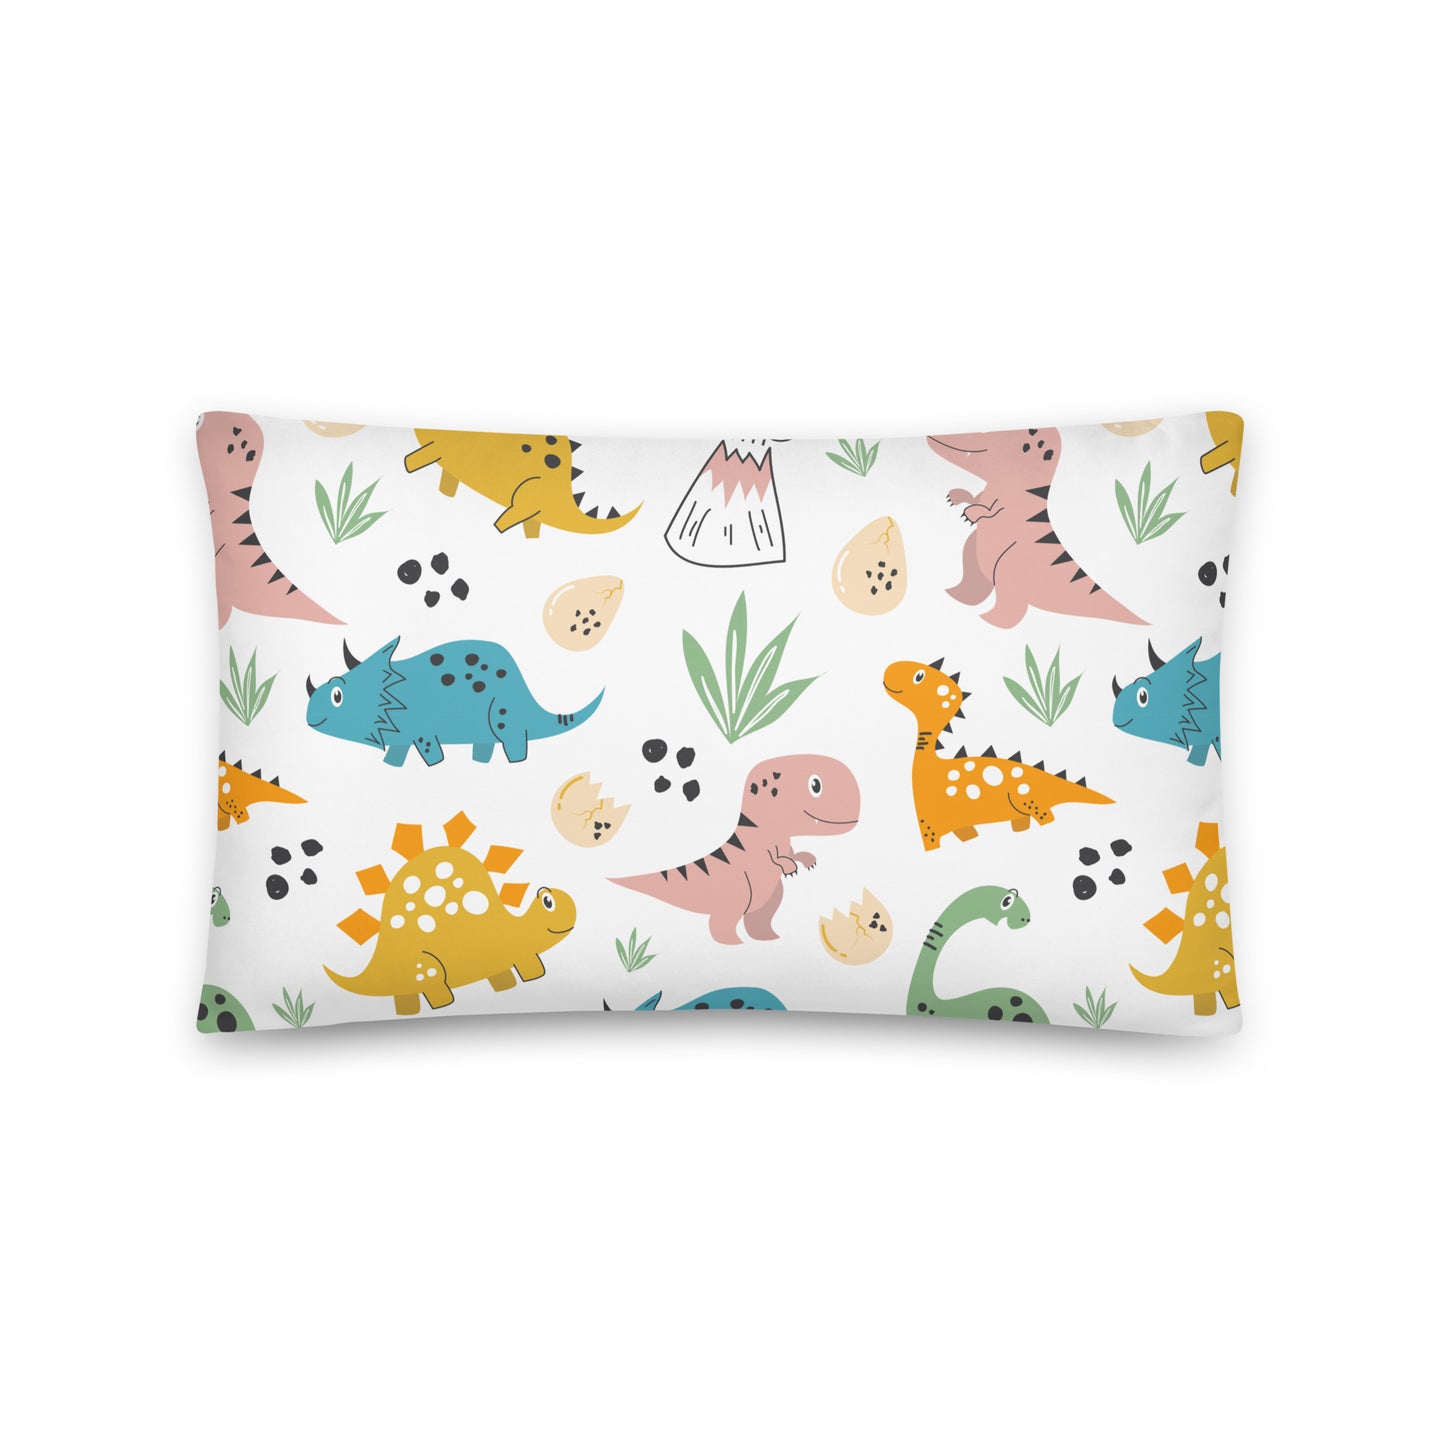 Dinosaur - Sustainably Made Pillows